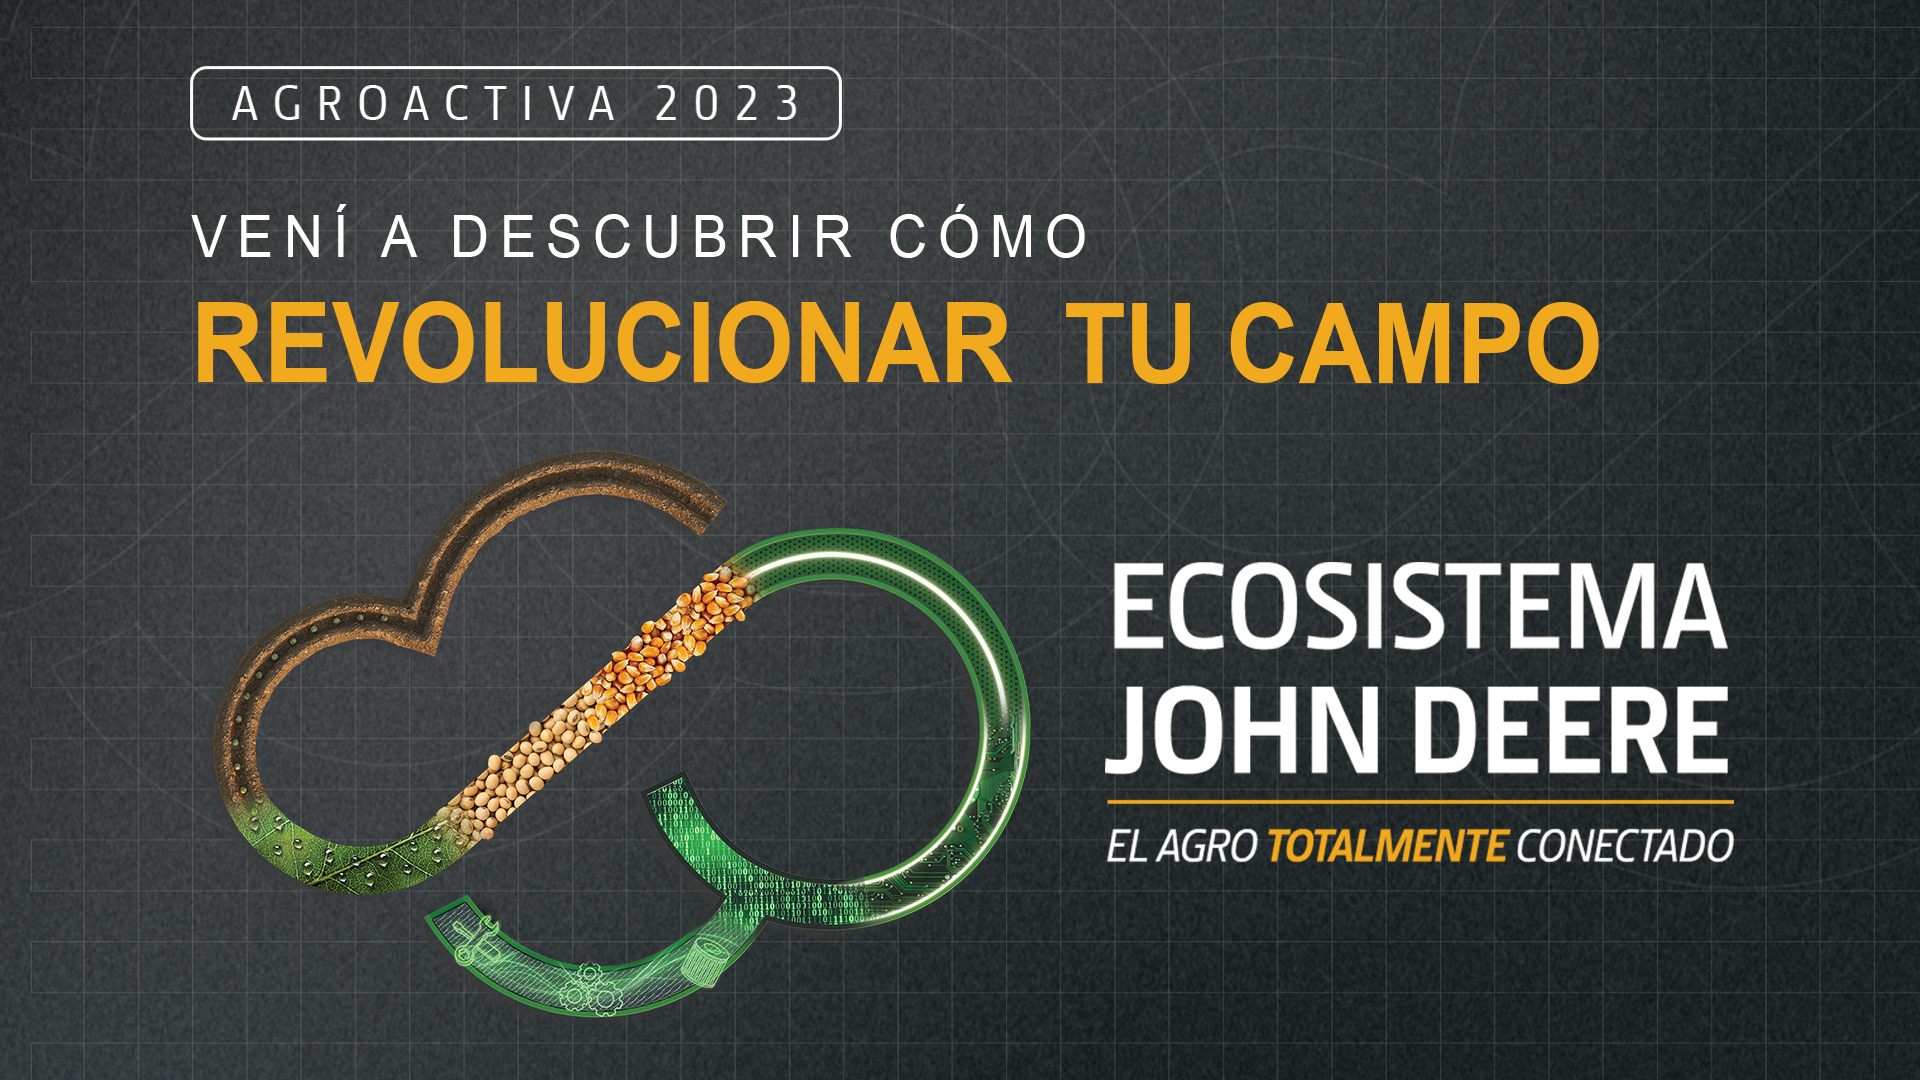 Promoción de Agroactiva 2023. Vení a descubrir como revolucionar tu campo. Ecosistema John Deere. El agro totalmente conectado.